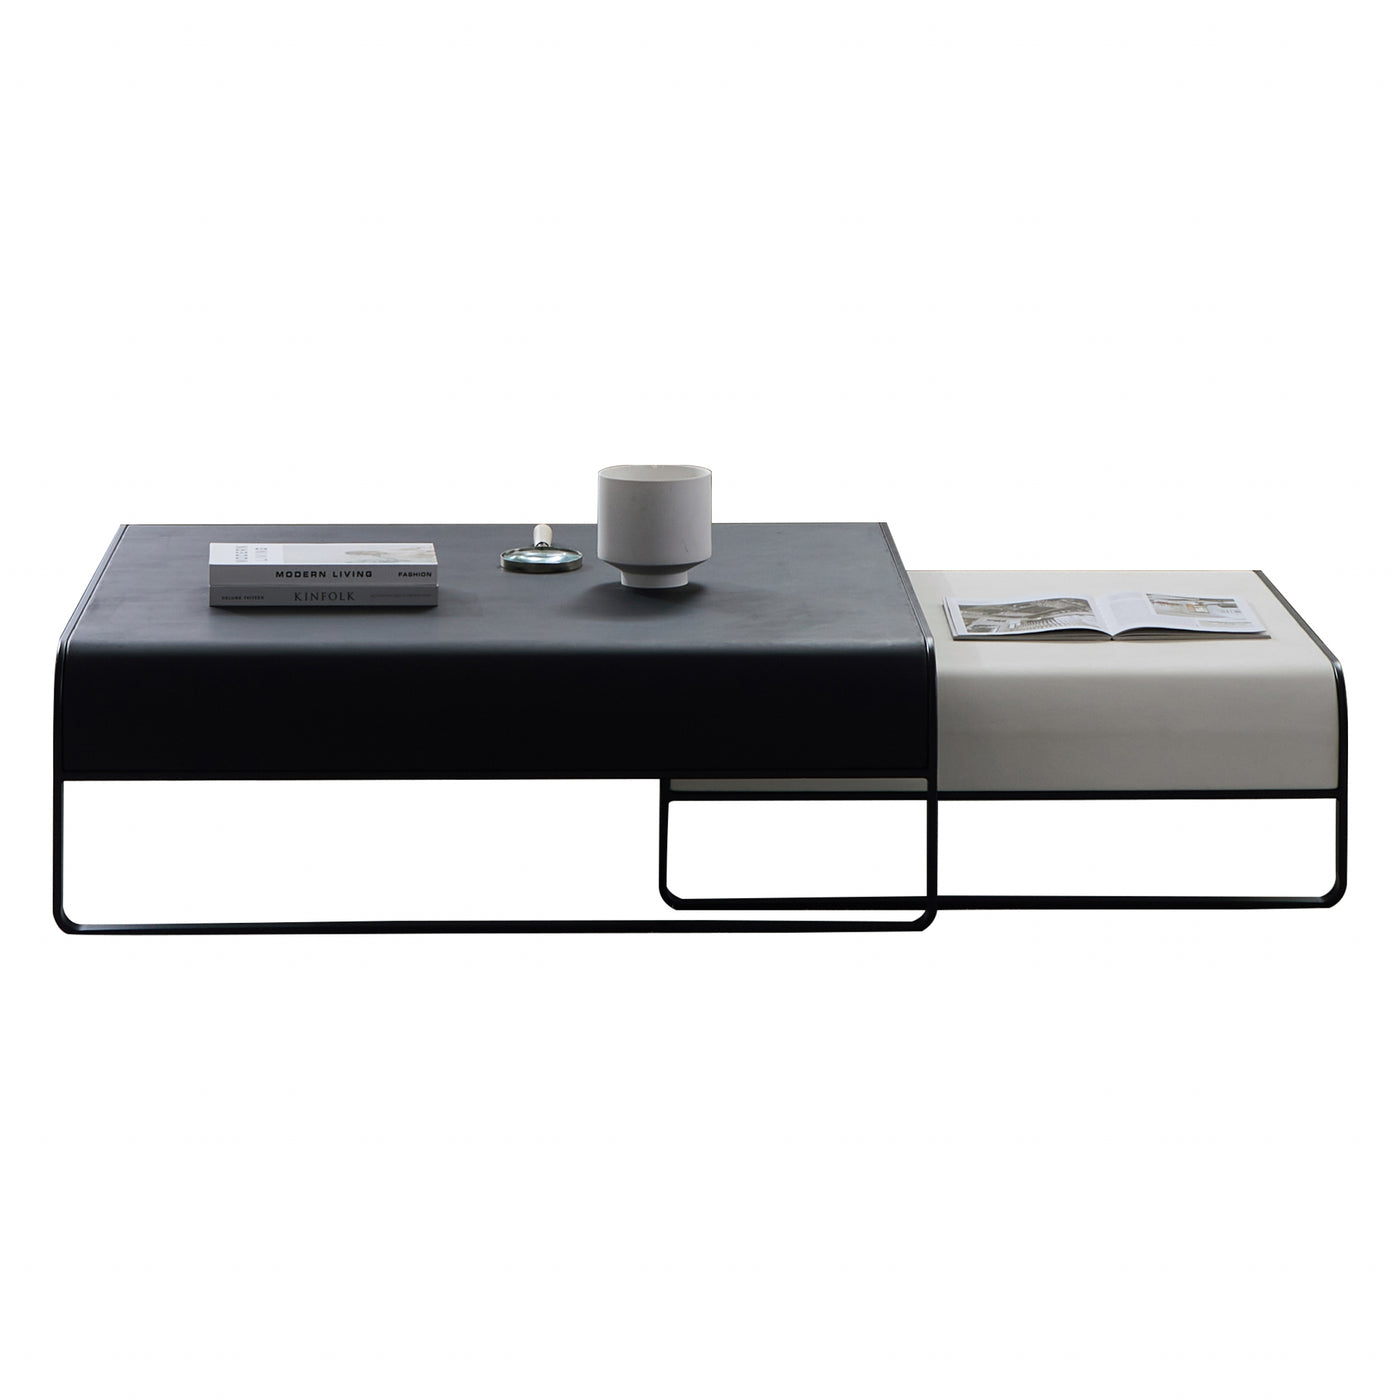 Duet coffee table set-39.4″ & 31.5″-Black & White